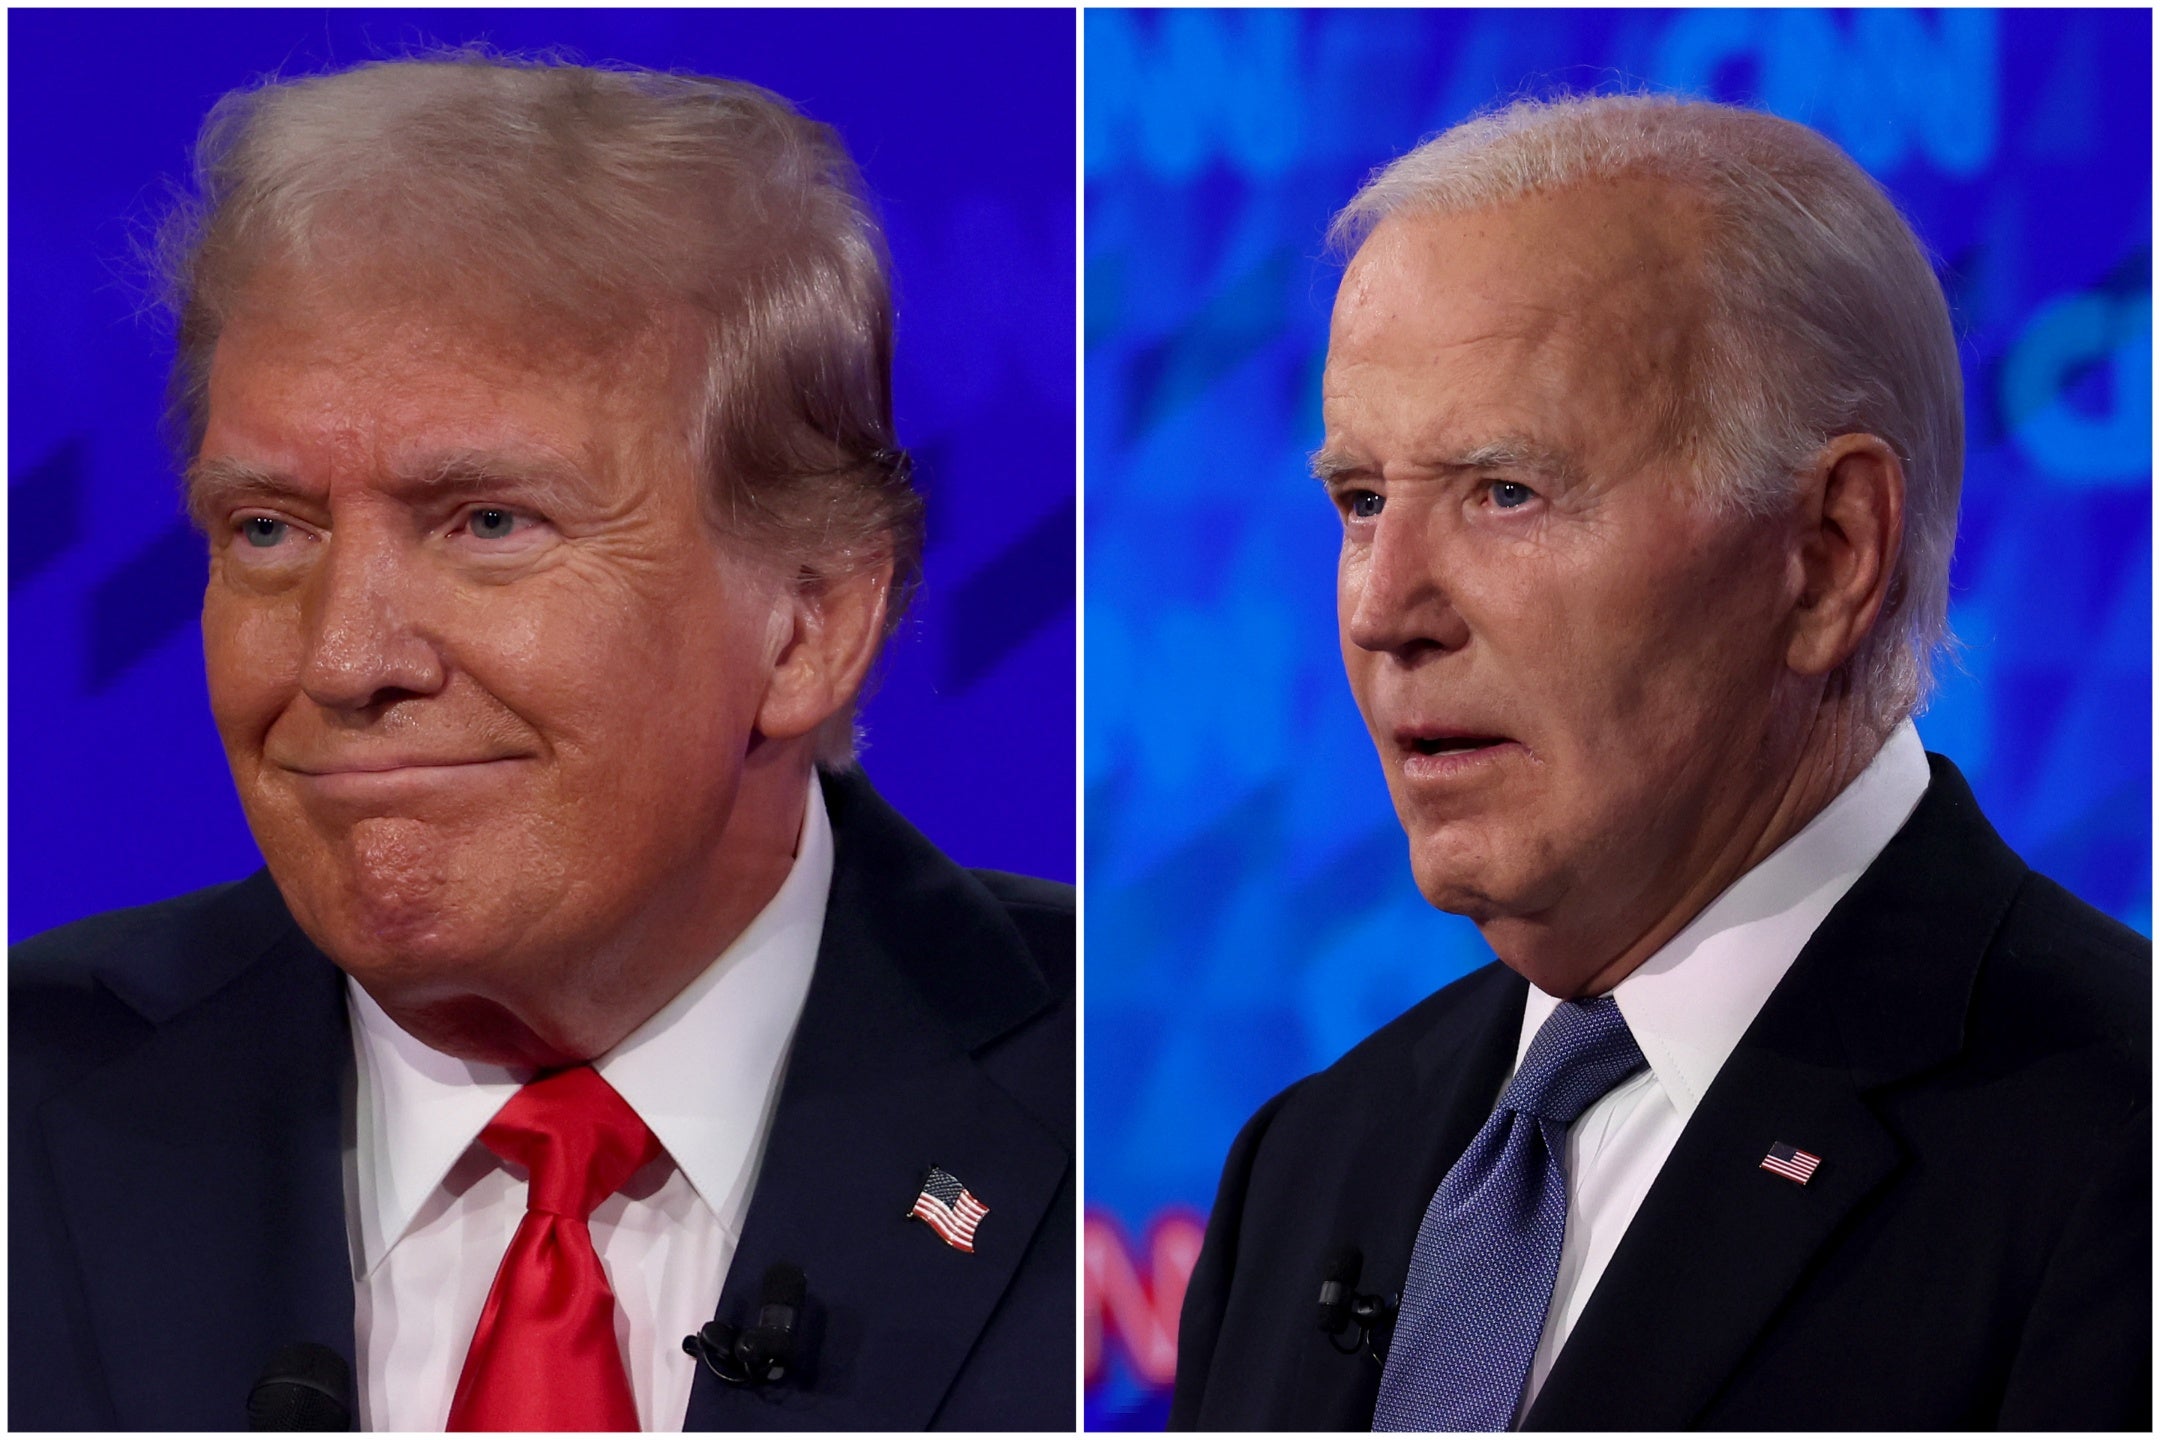 Donald Trump and Joe Biden at the first presidential debate